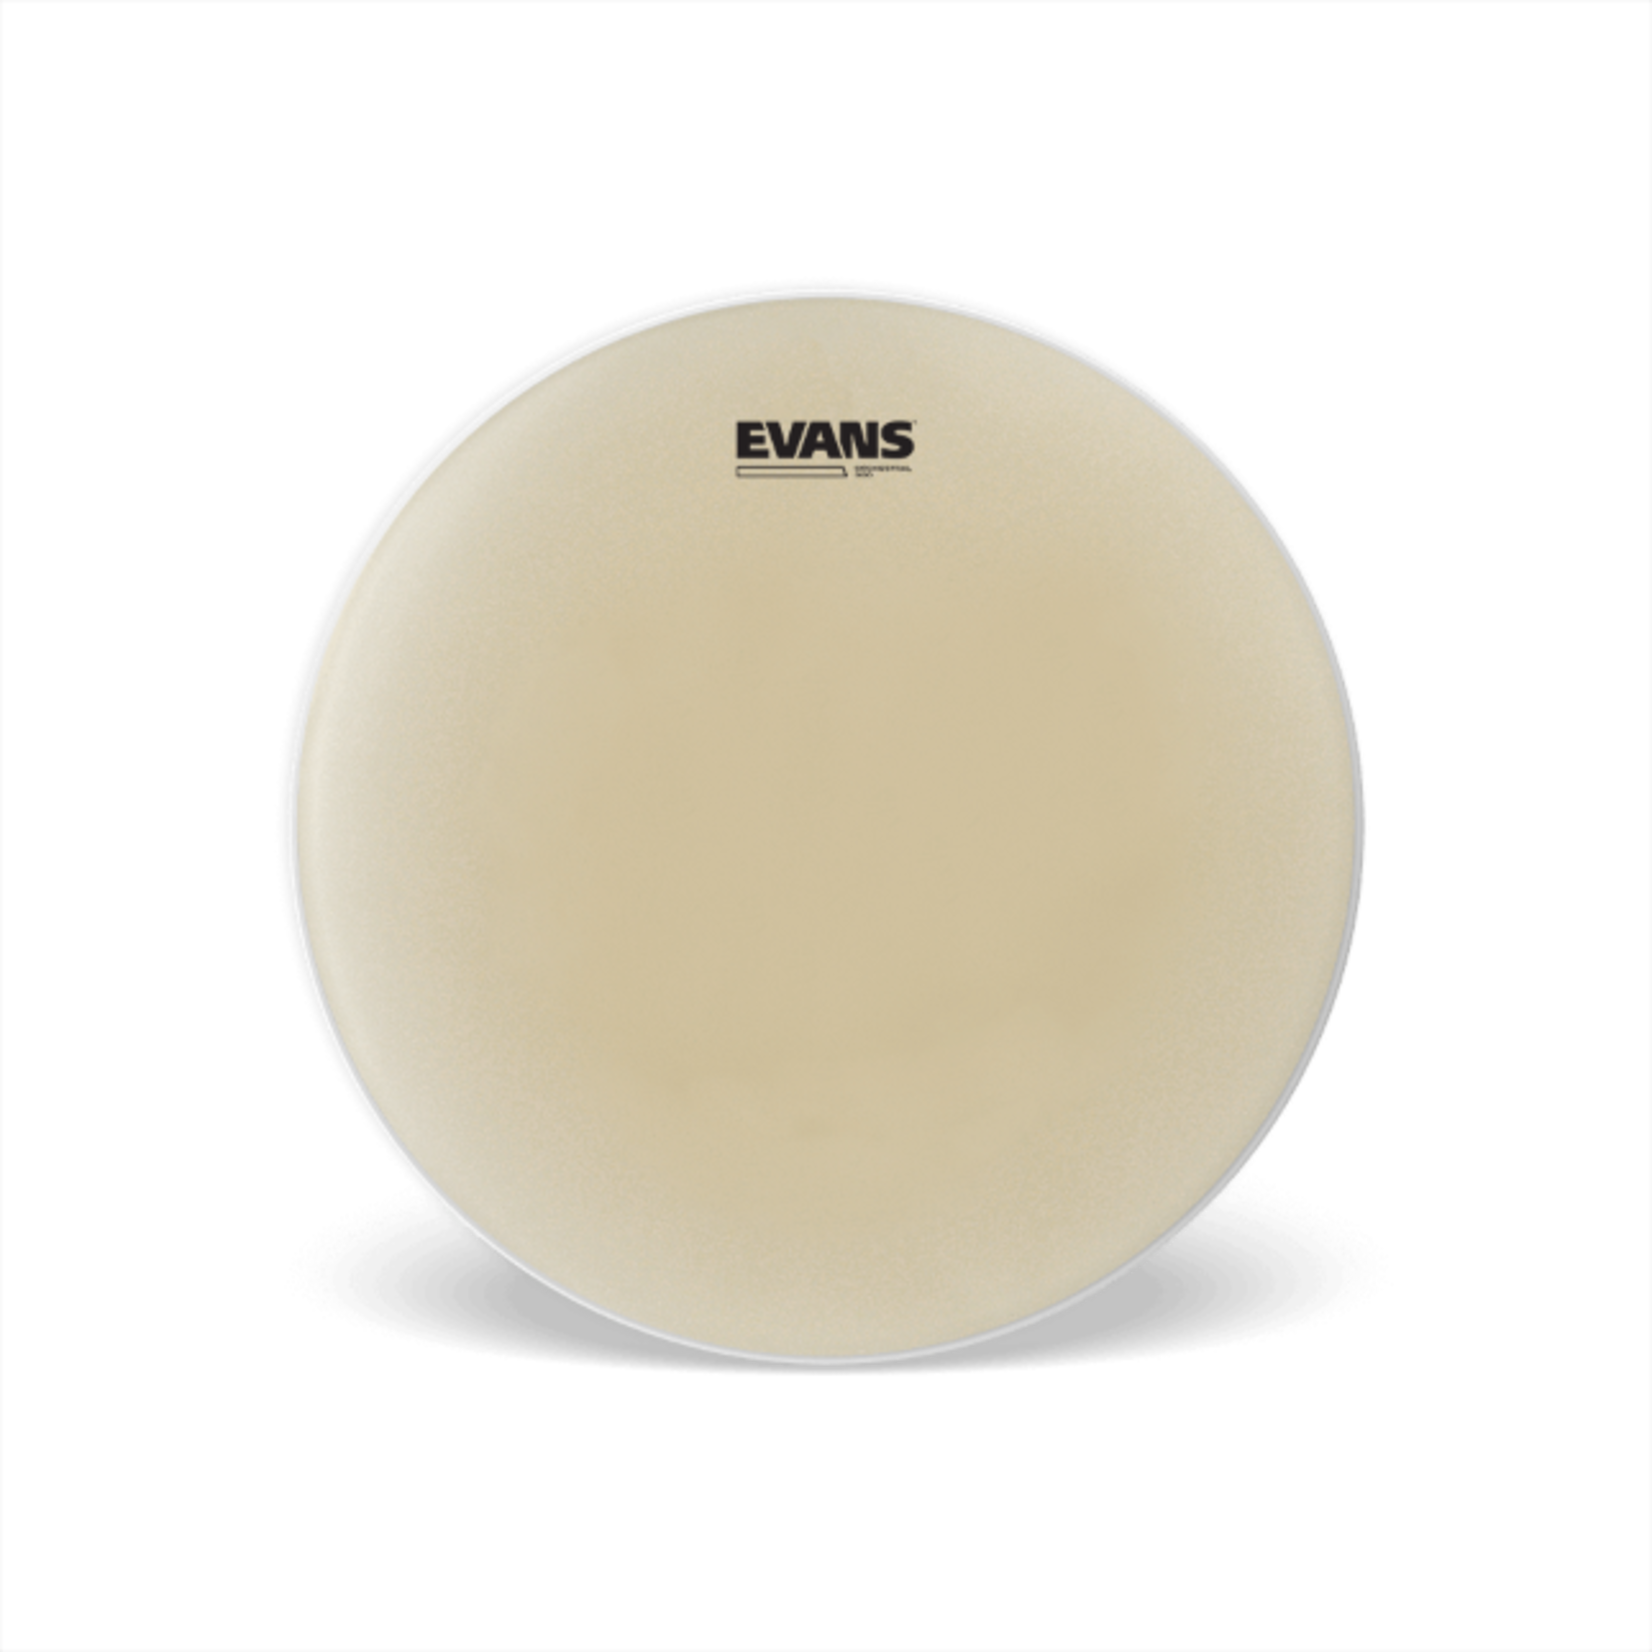 Evans Snare Side - 300 14" Resonant Drum Head